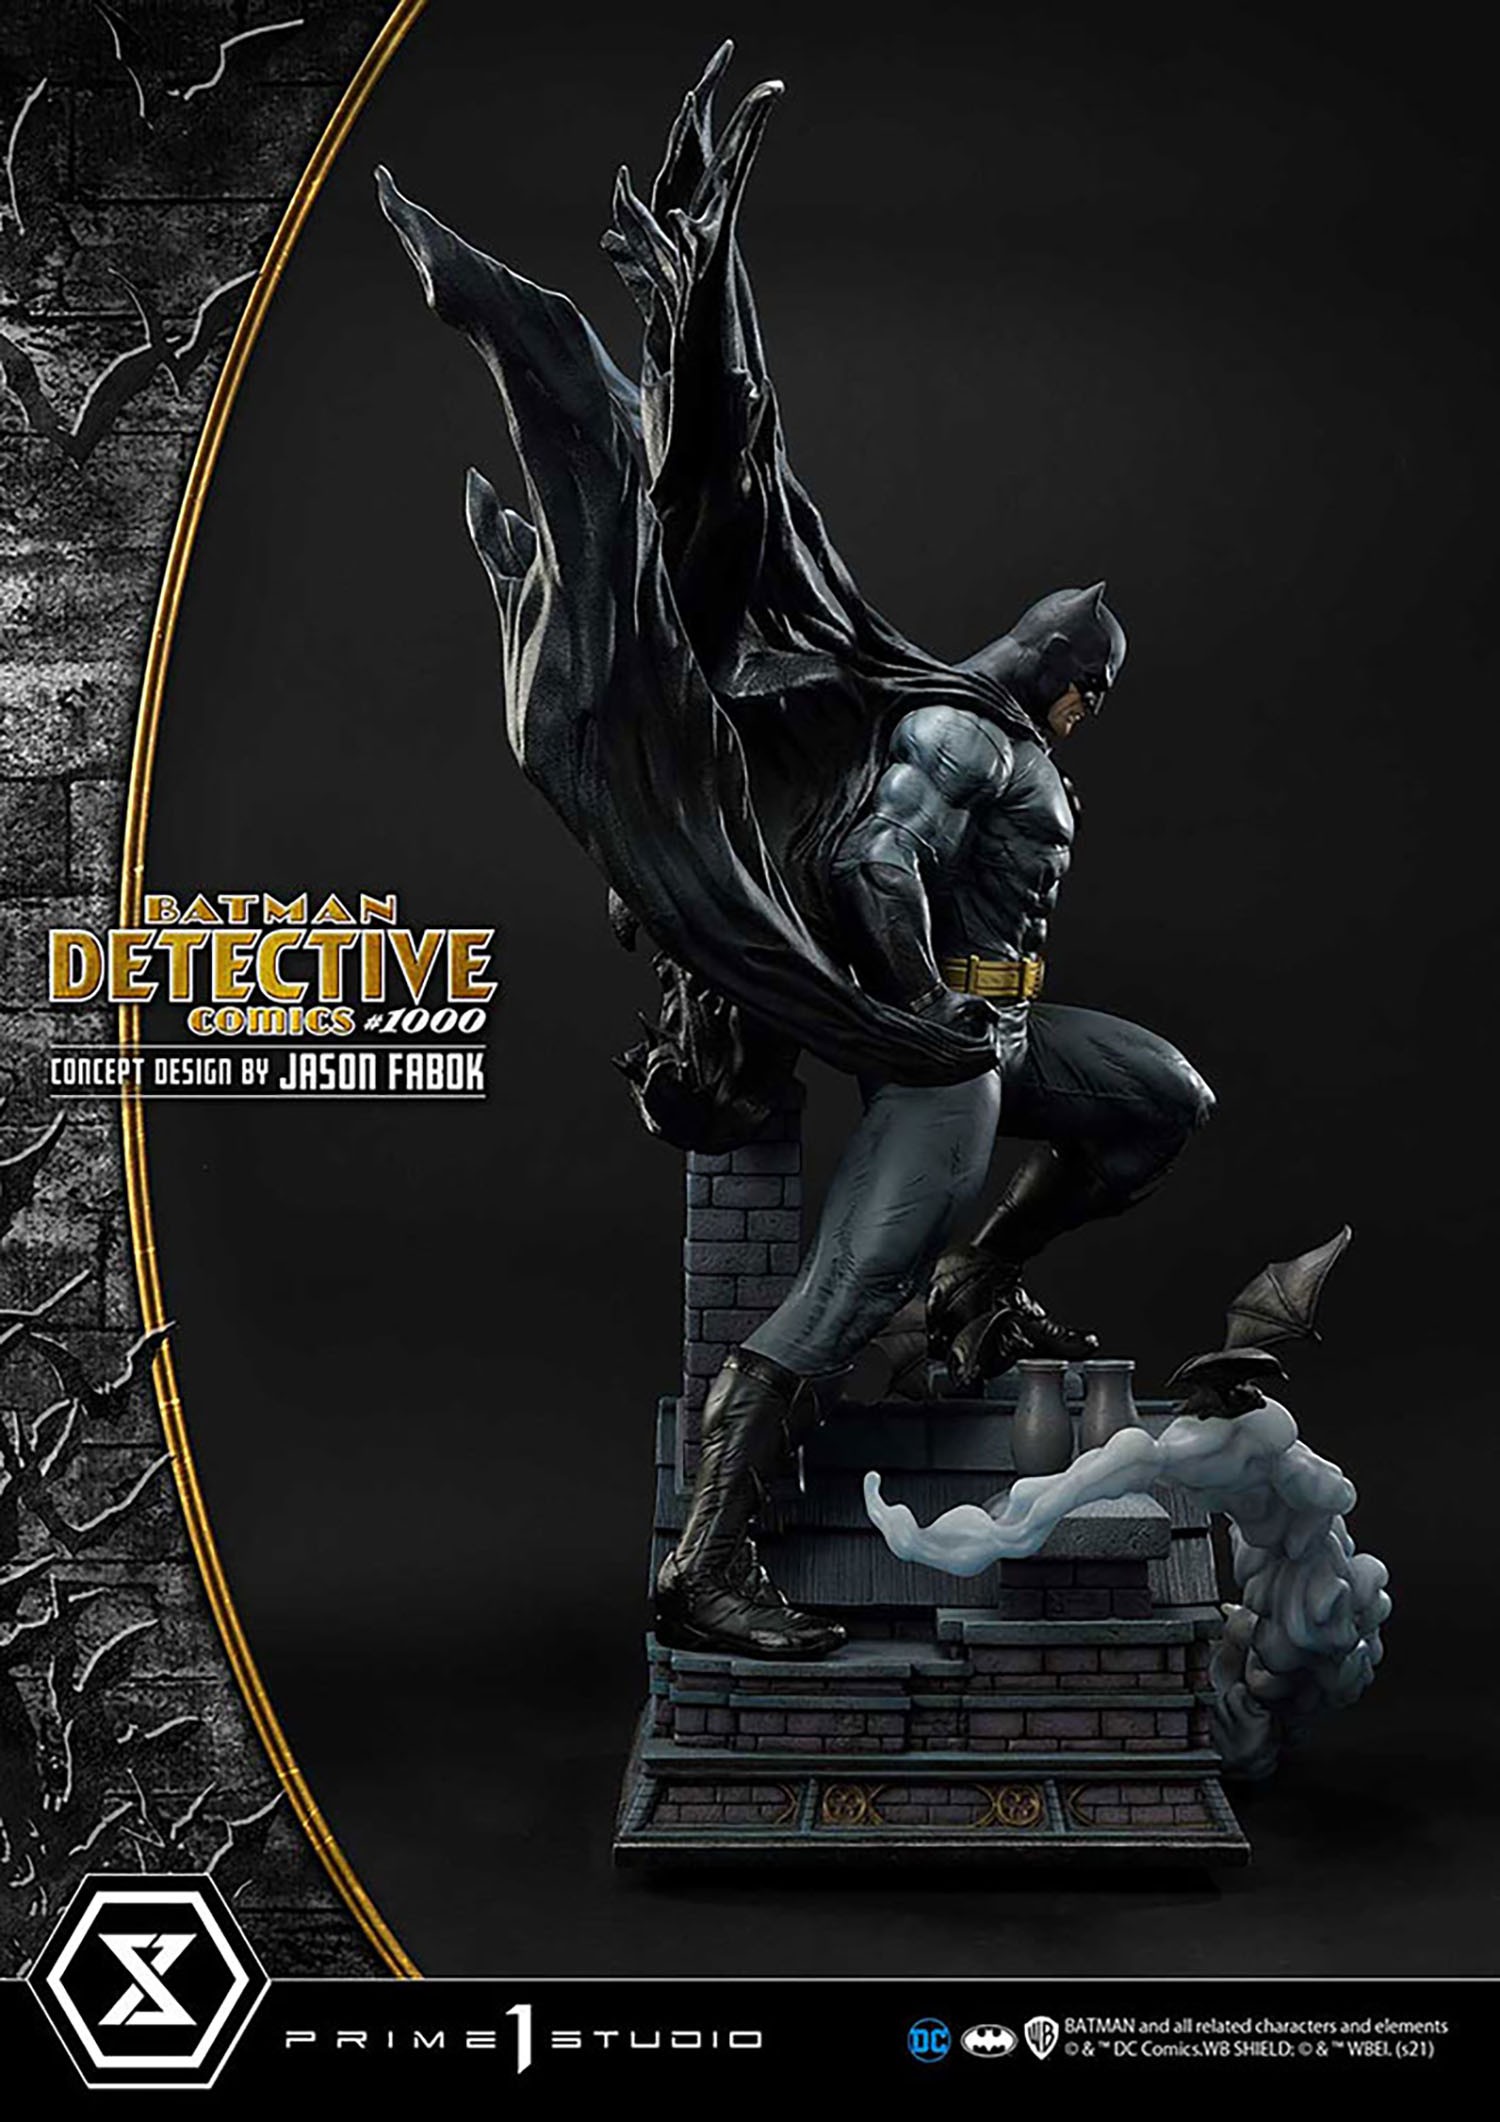 Batman Detective Comics #1000 Collector Edition (Prototype Shown) View 13